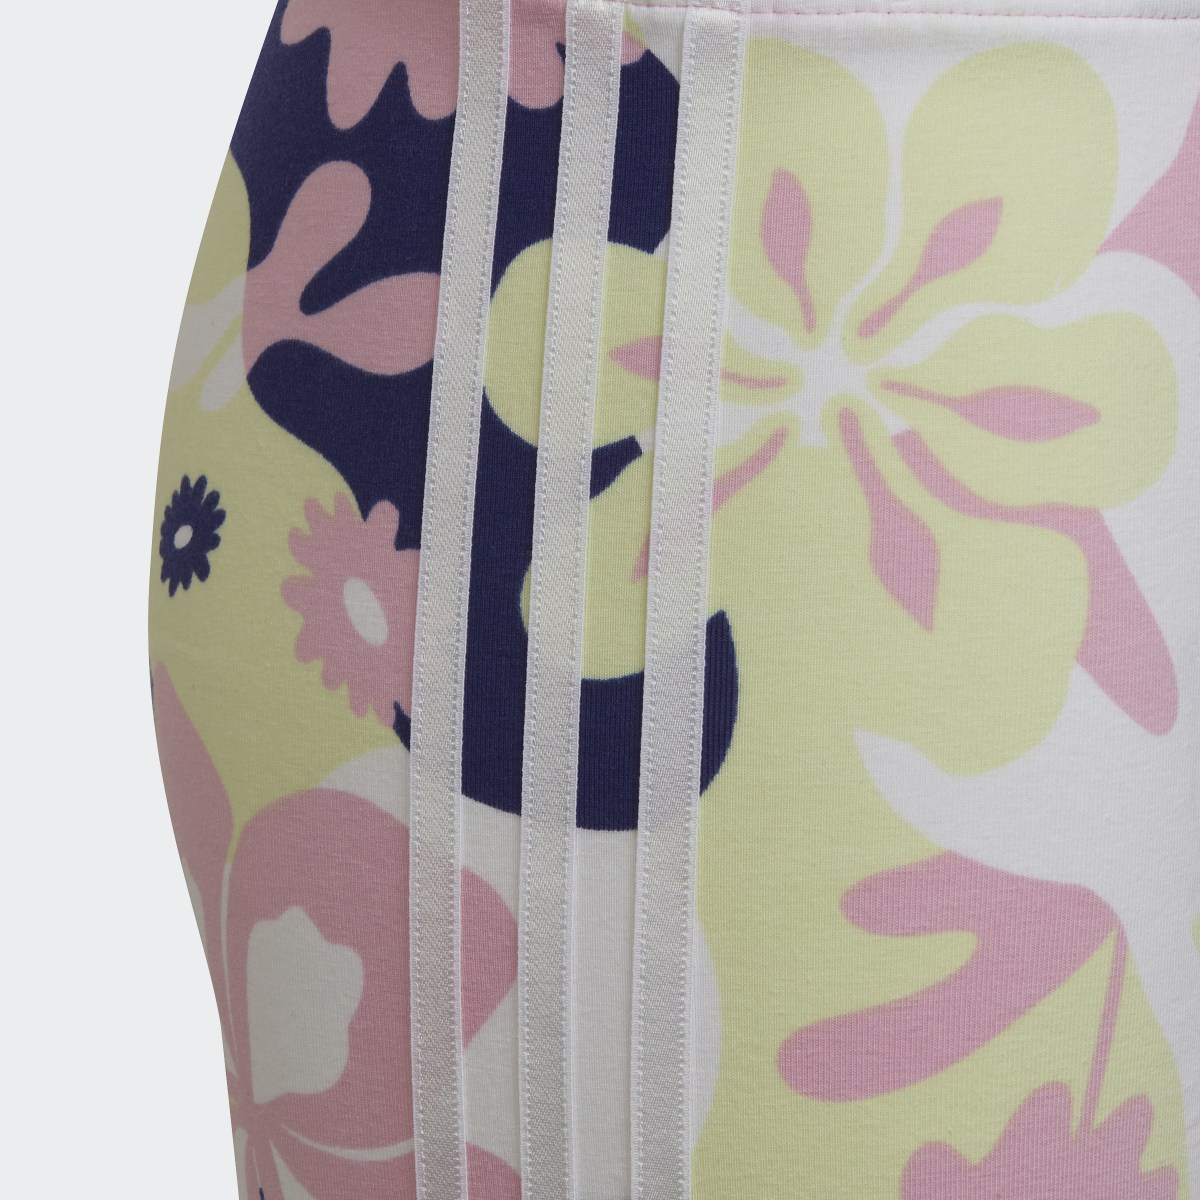 Adidas Short cysliste Allover Flower Print. 5